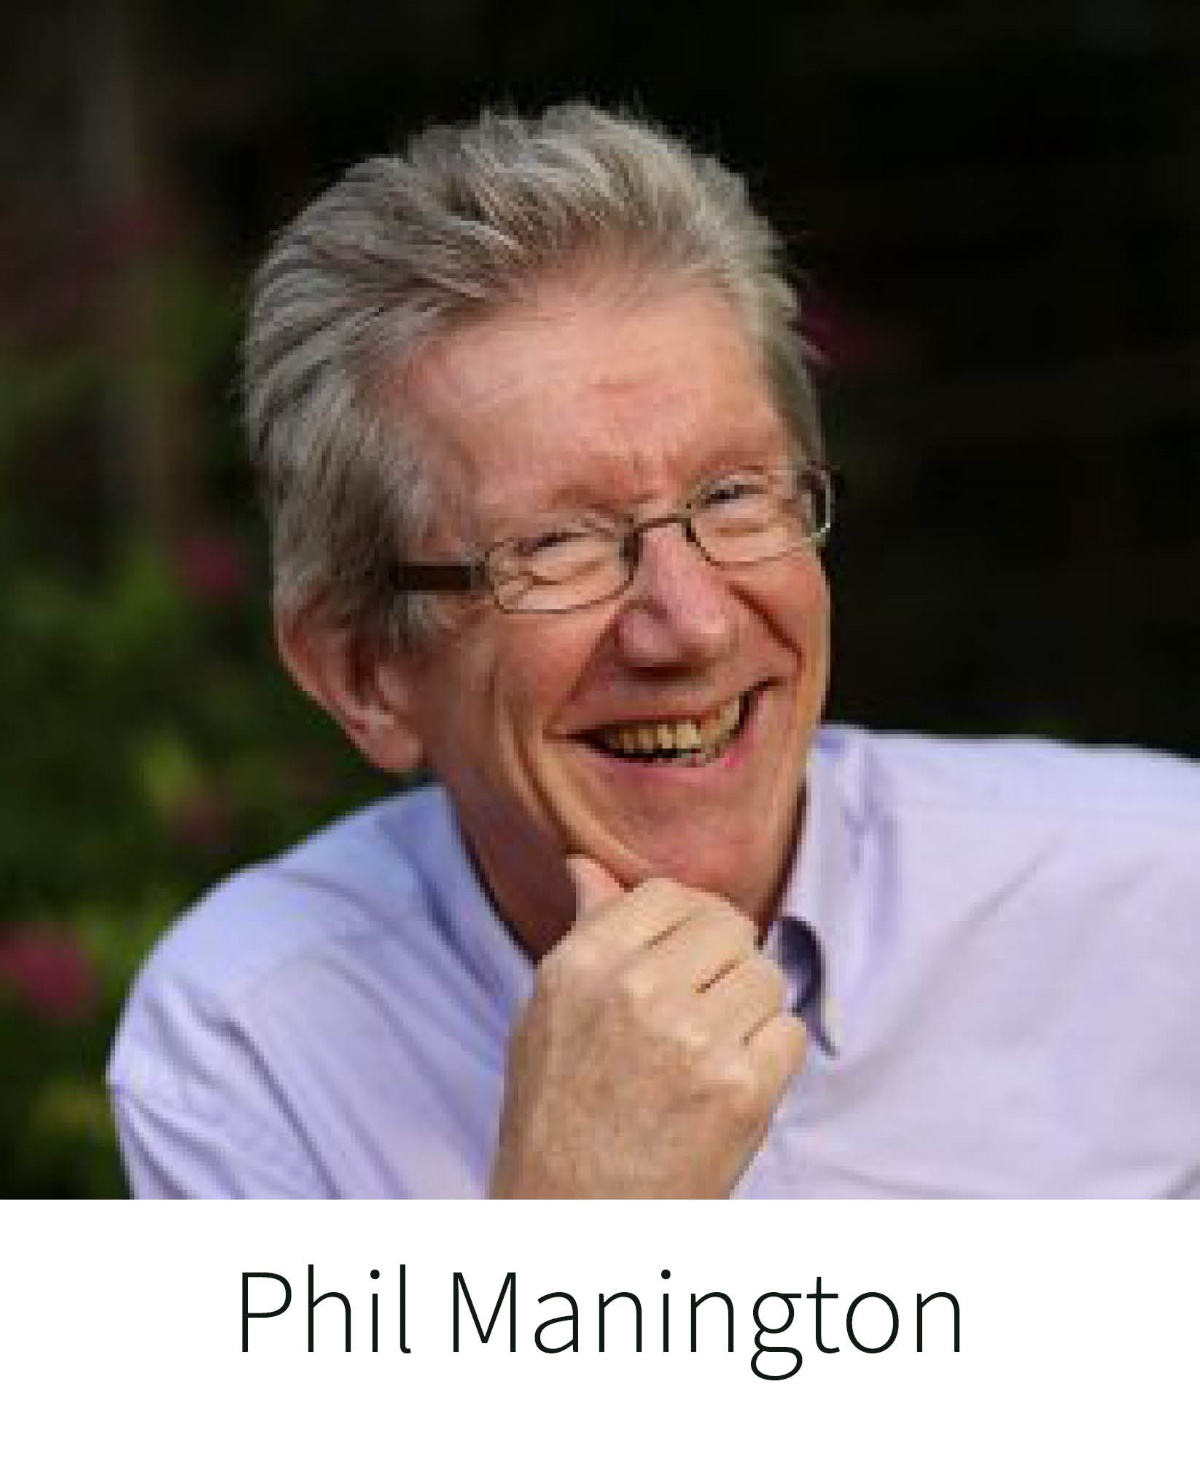 Phil Manington